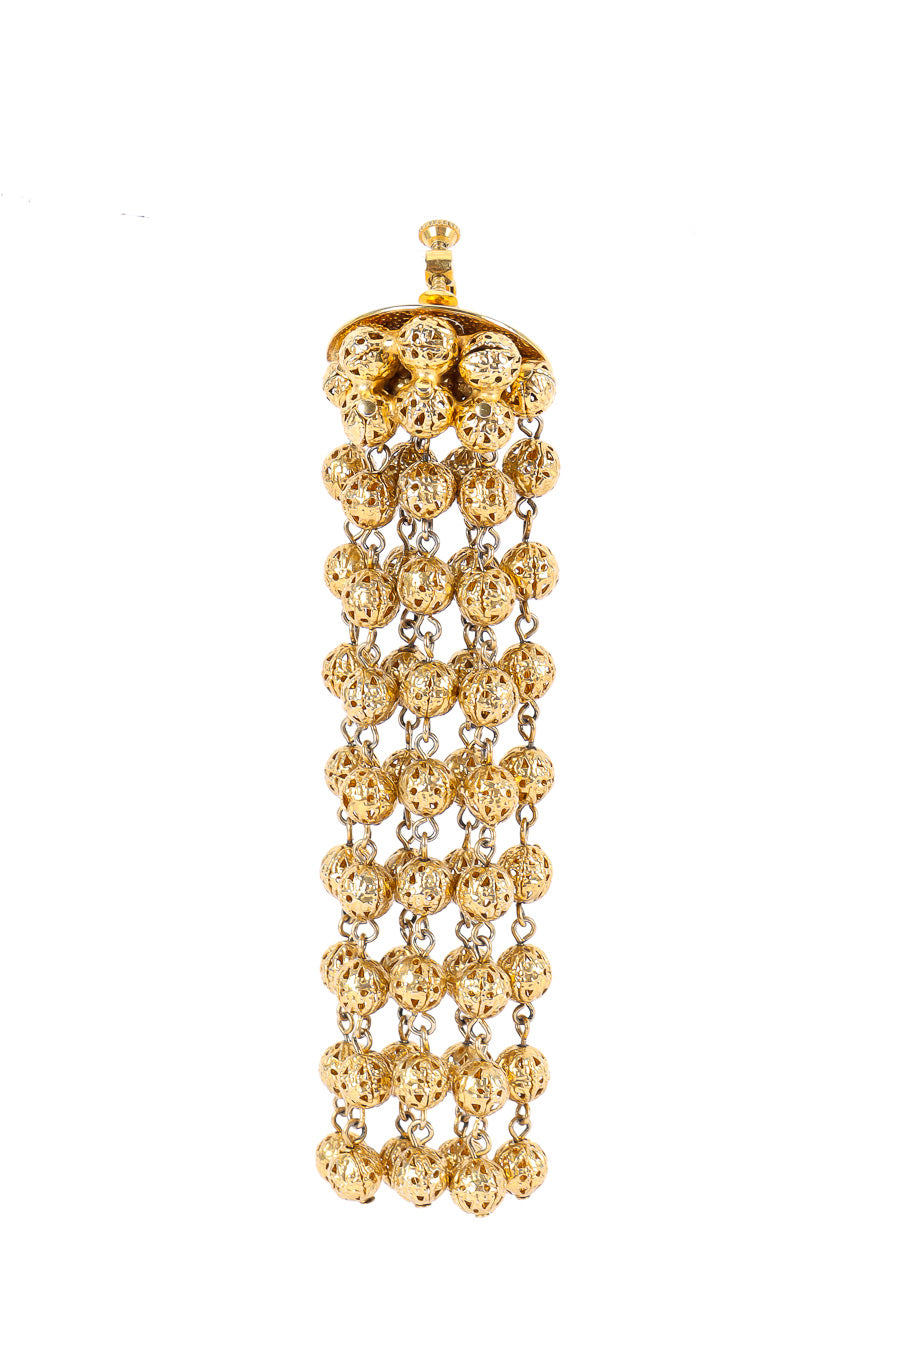 Long gold filigree ball shoulder duster drop earrings detail photo. @recessla 